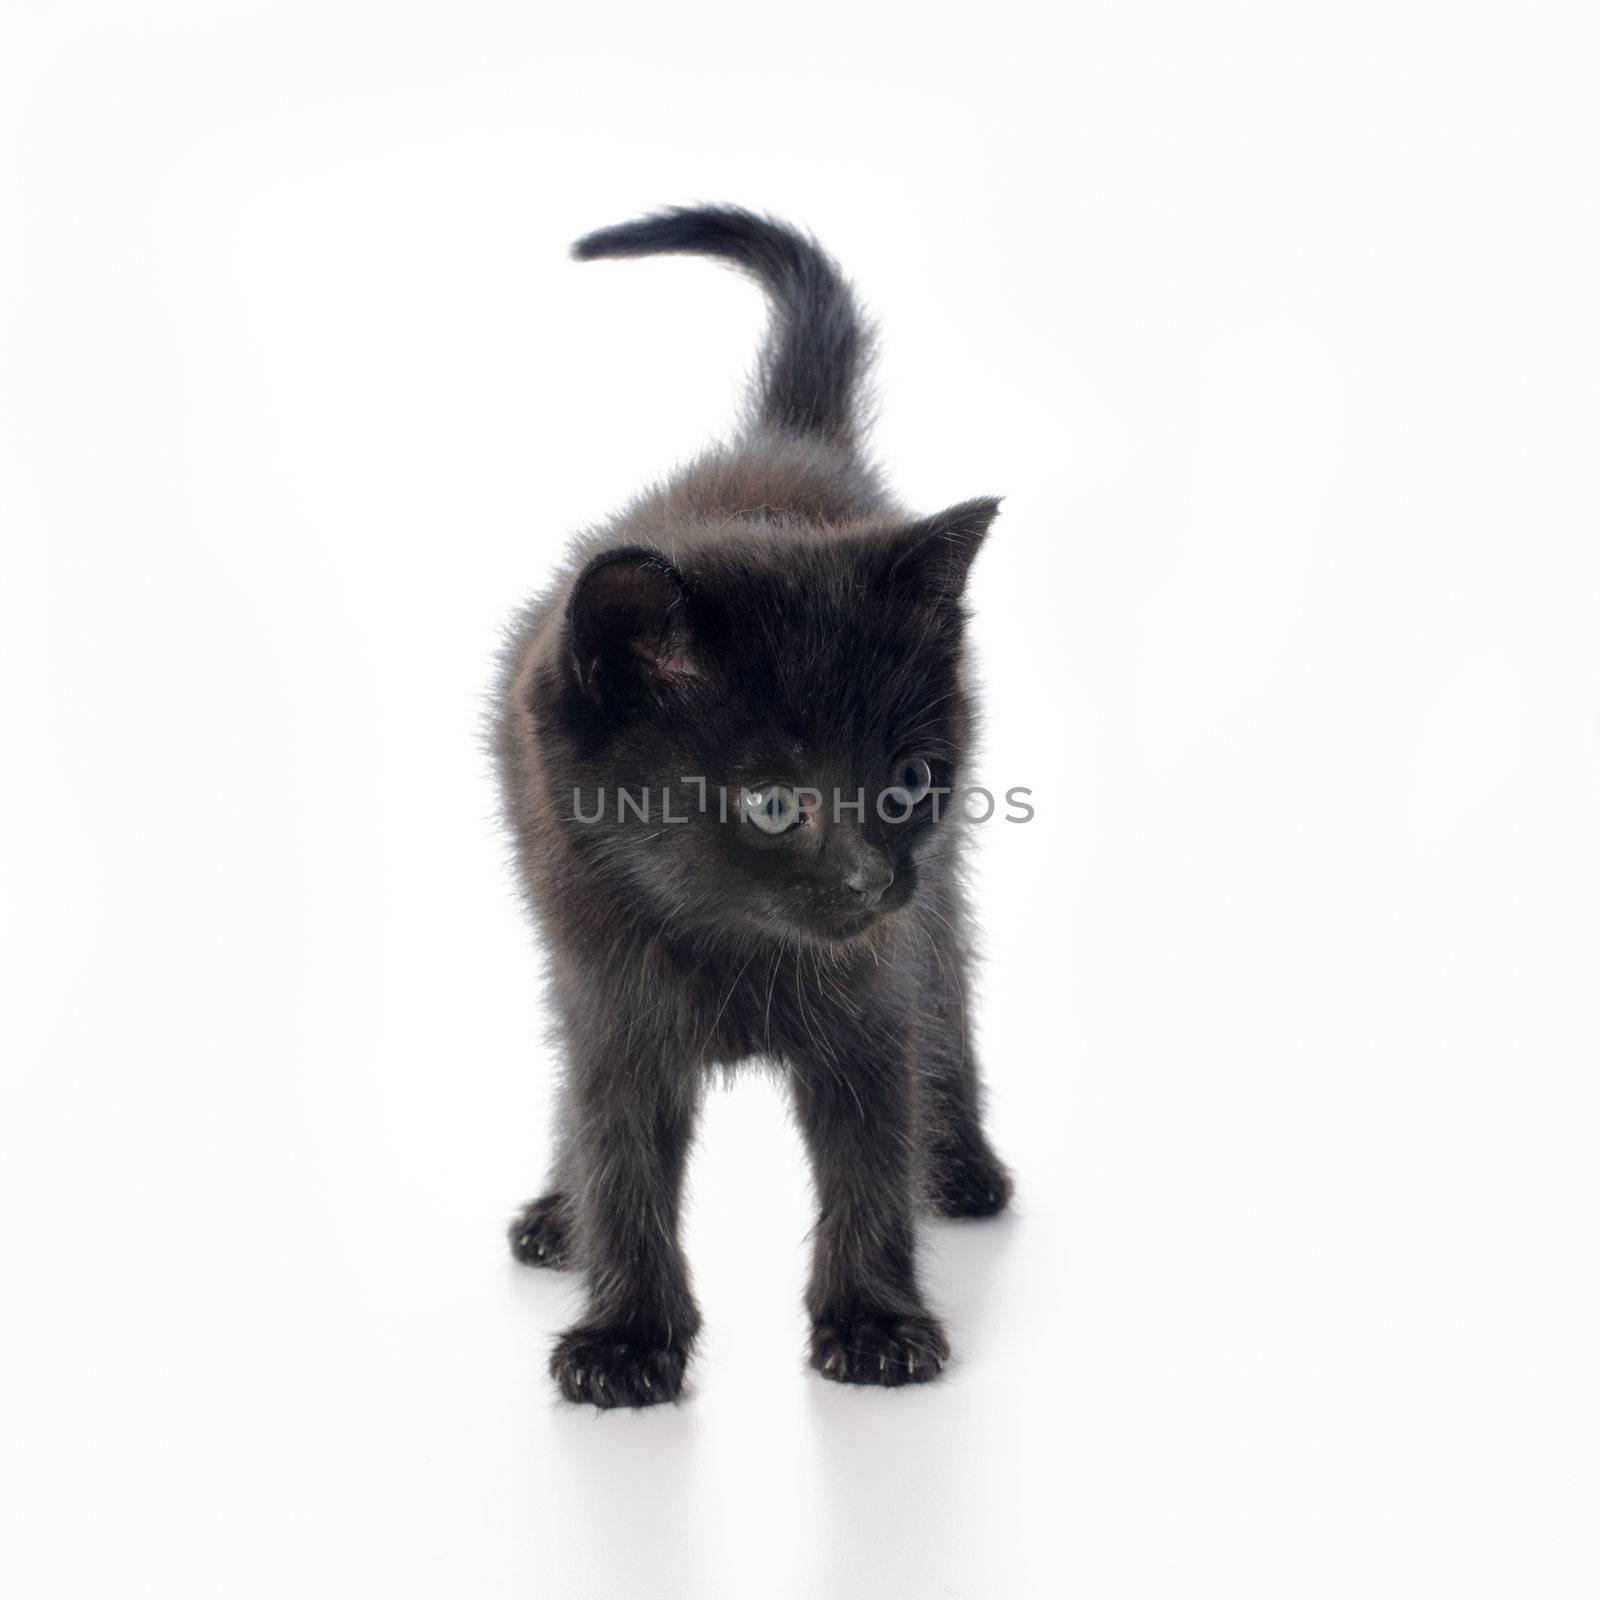 Fanny black kitten isolated on white background